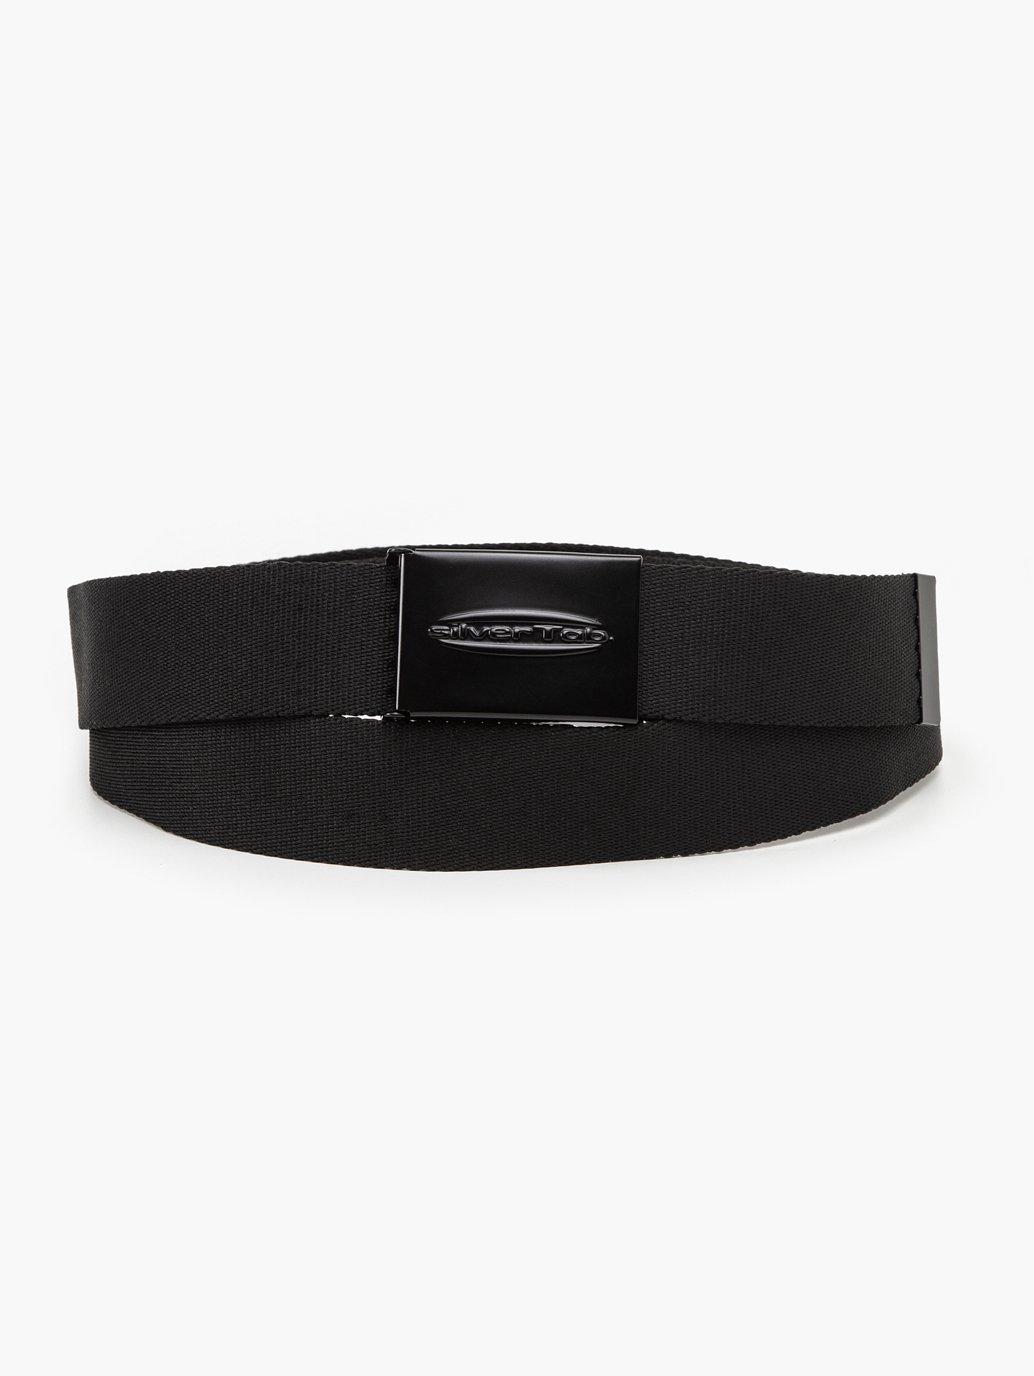 Buy Levi's® Men's Silver Tab™ Belt | Levi's® Official Online Store SG